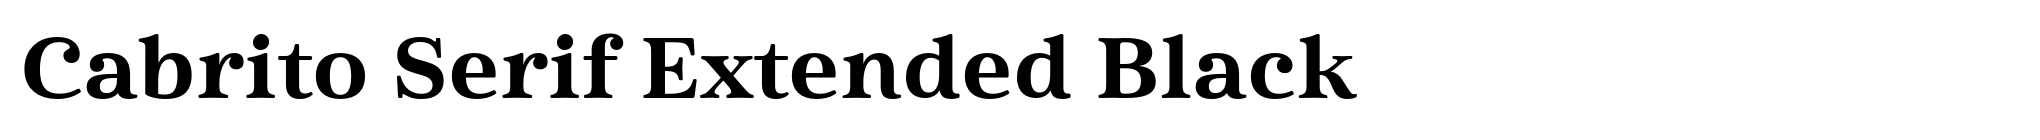 Cabrito Serif Extended Black image